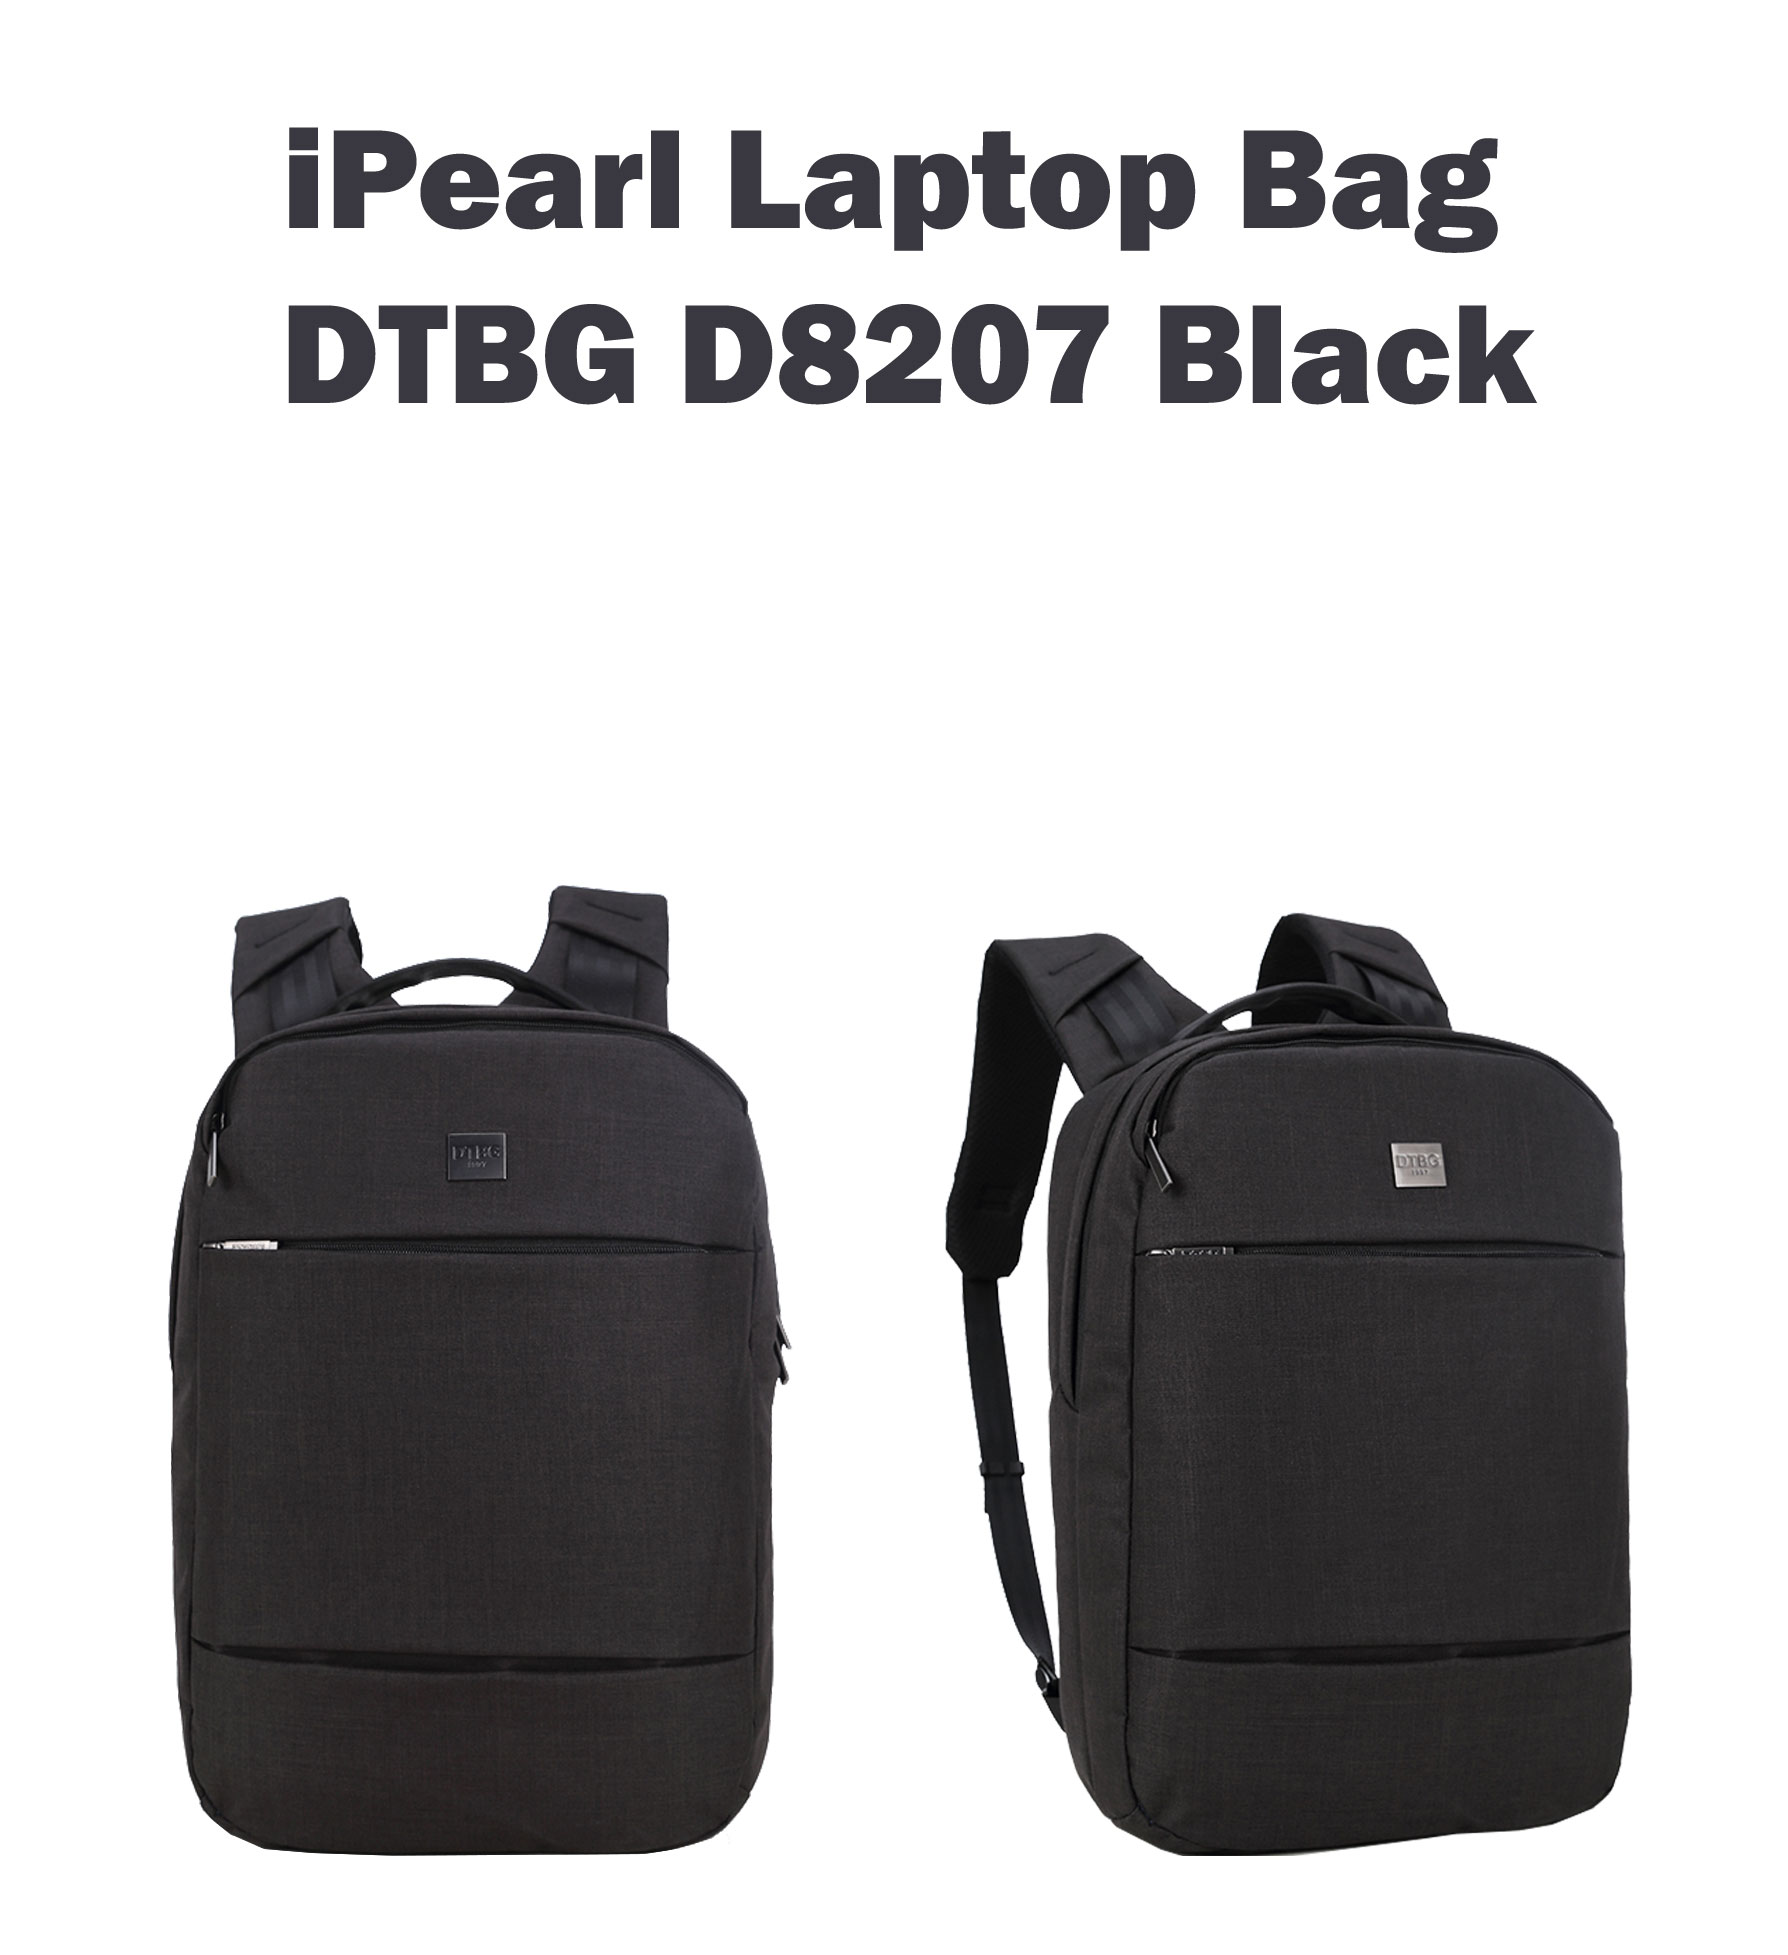 iPearl Laptop Bag DTBG D8207 Black